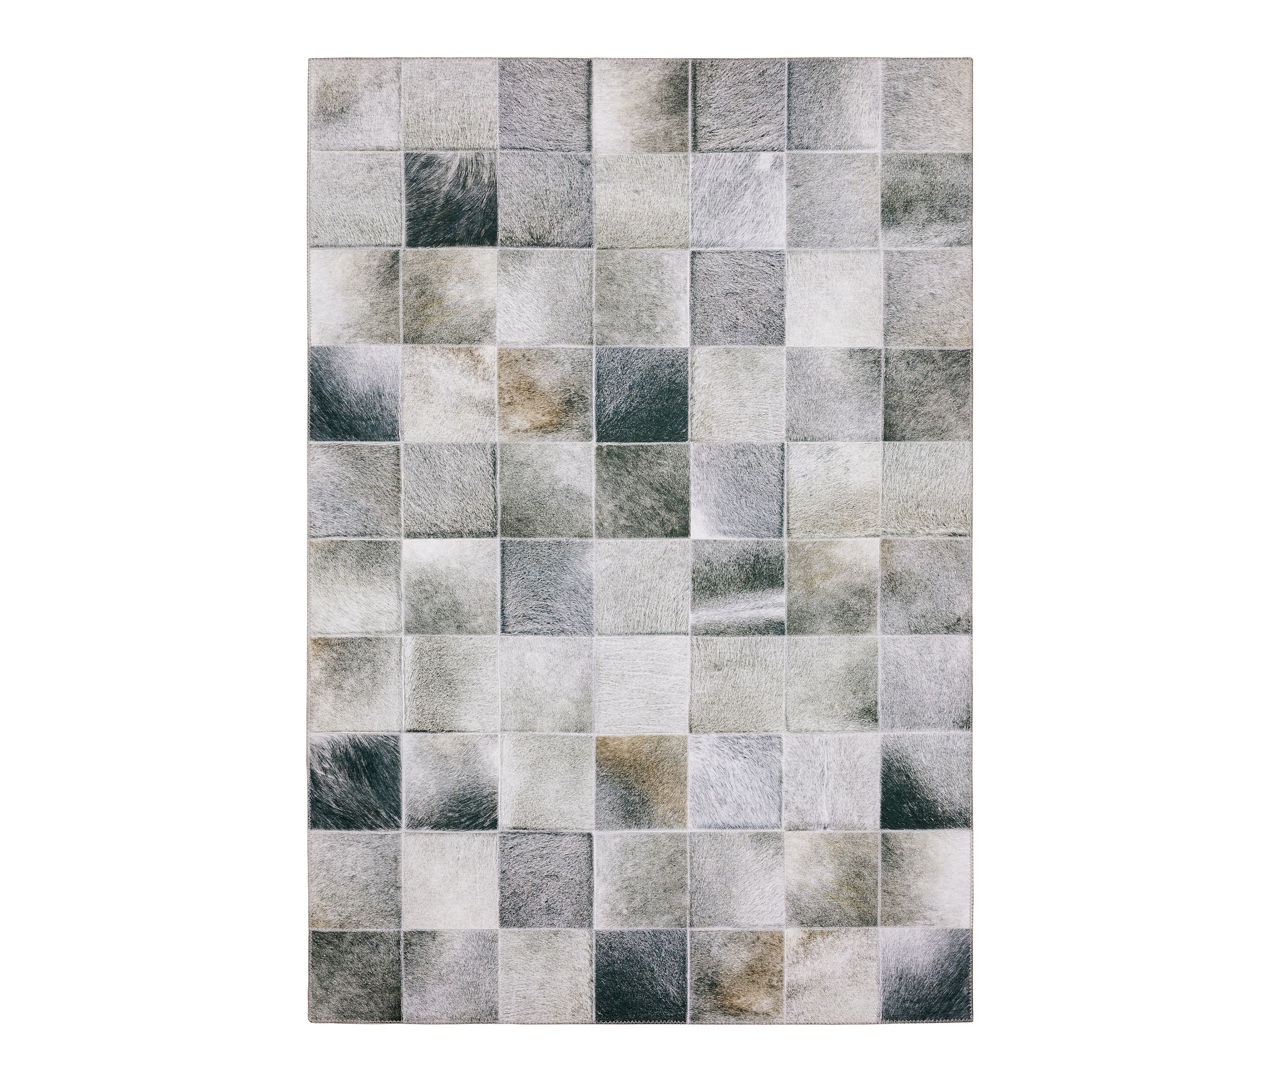 Mylen Gray & Charcoal Faux Hide Tile Pattern Area Rug, (5' x 7')